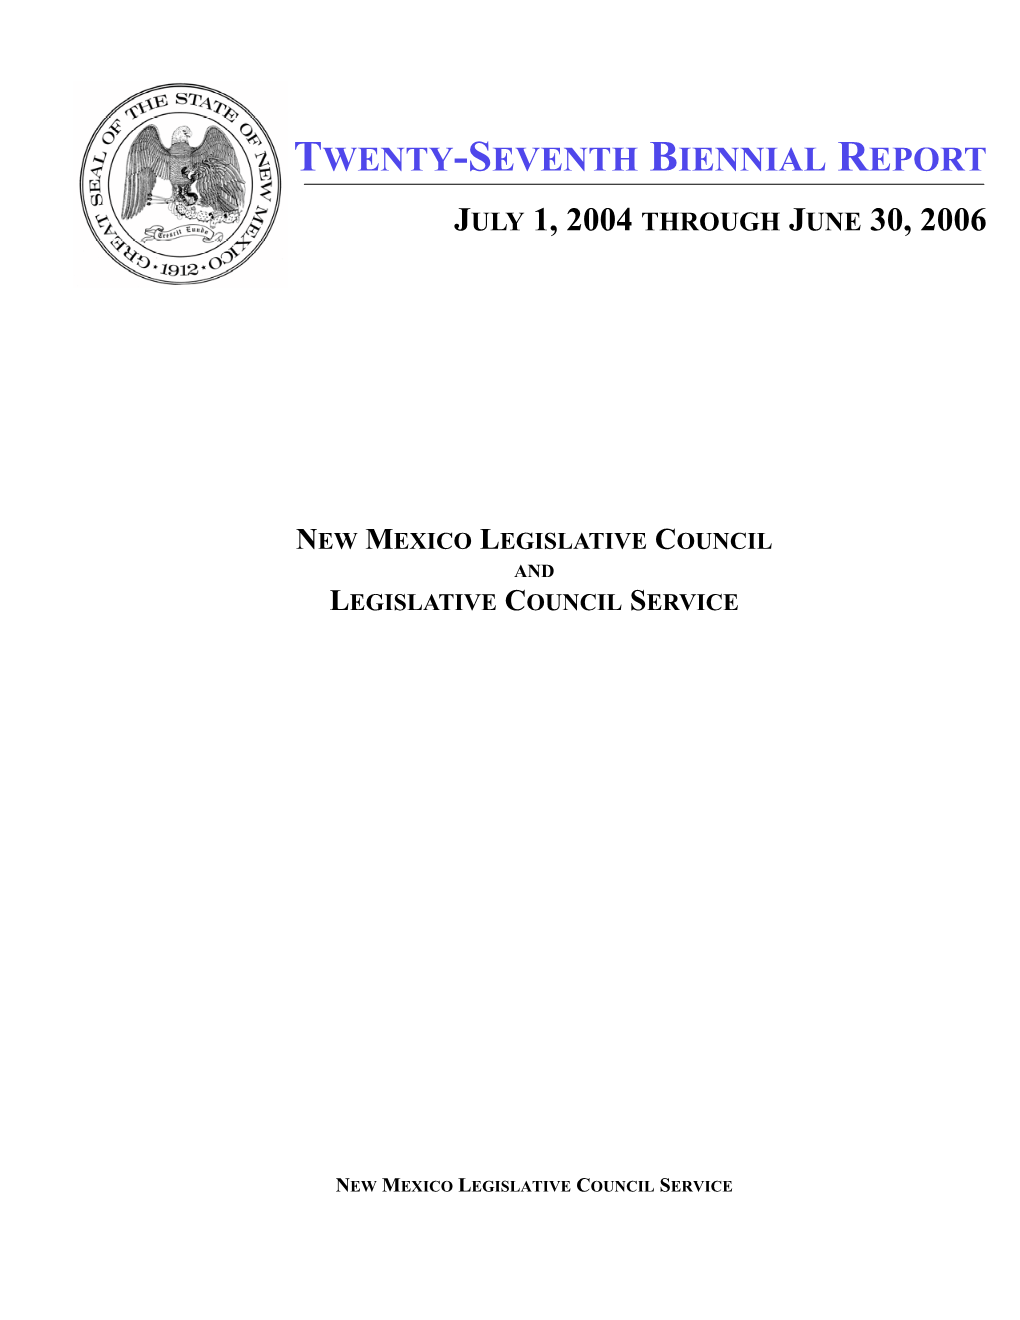 Biennial Report 2004-2006